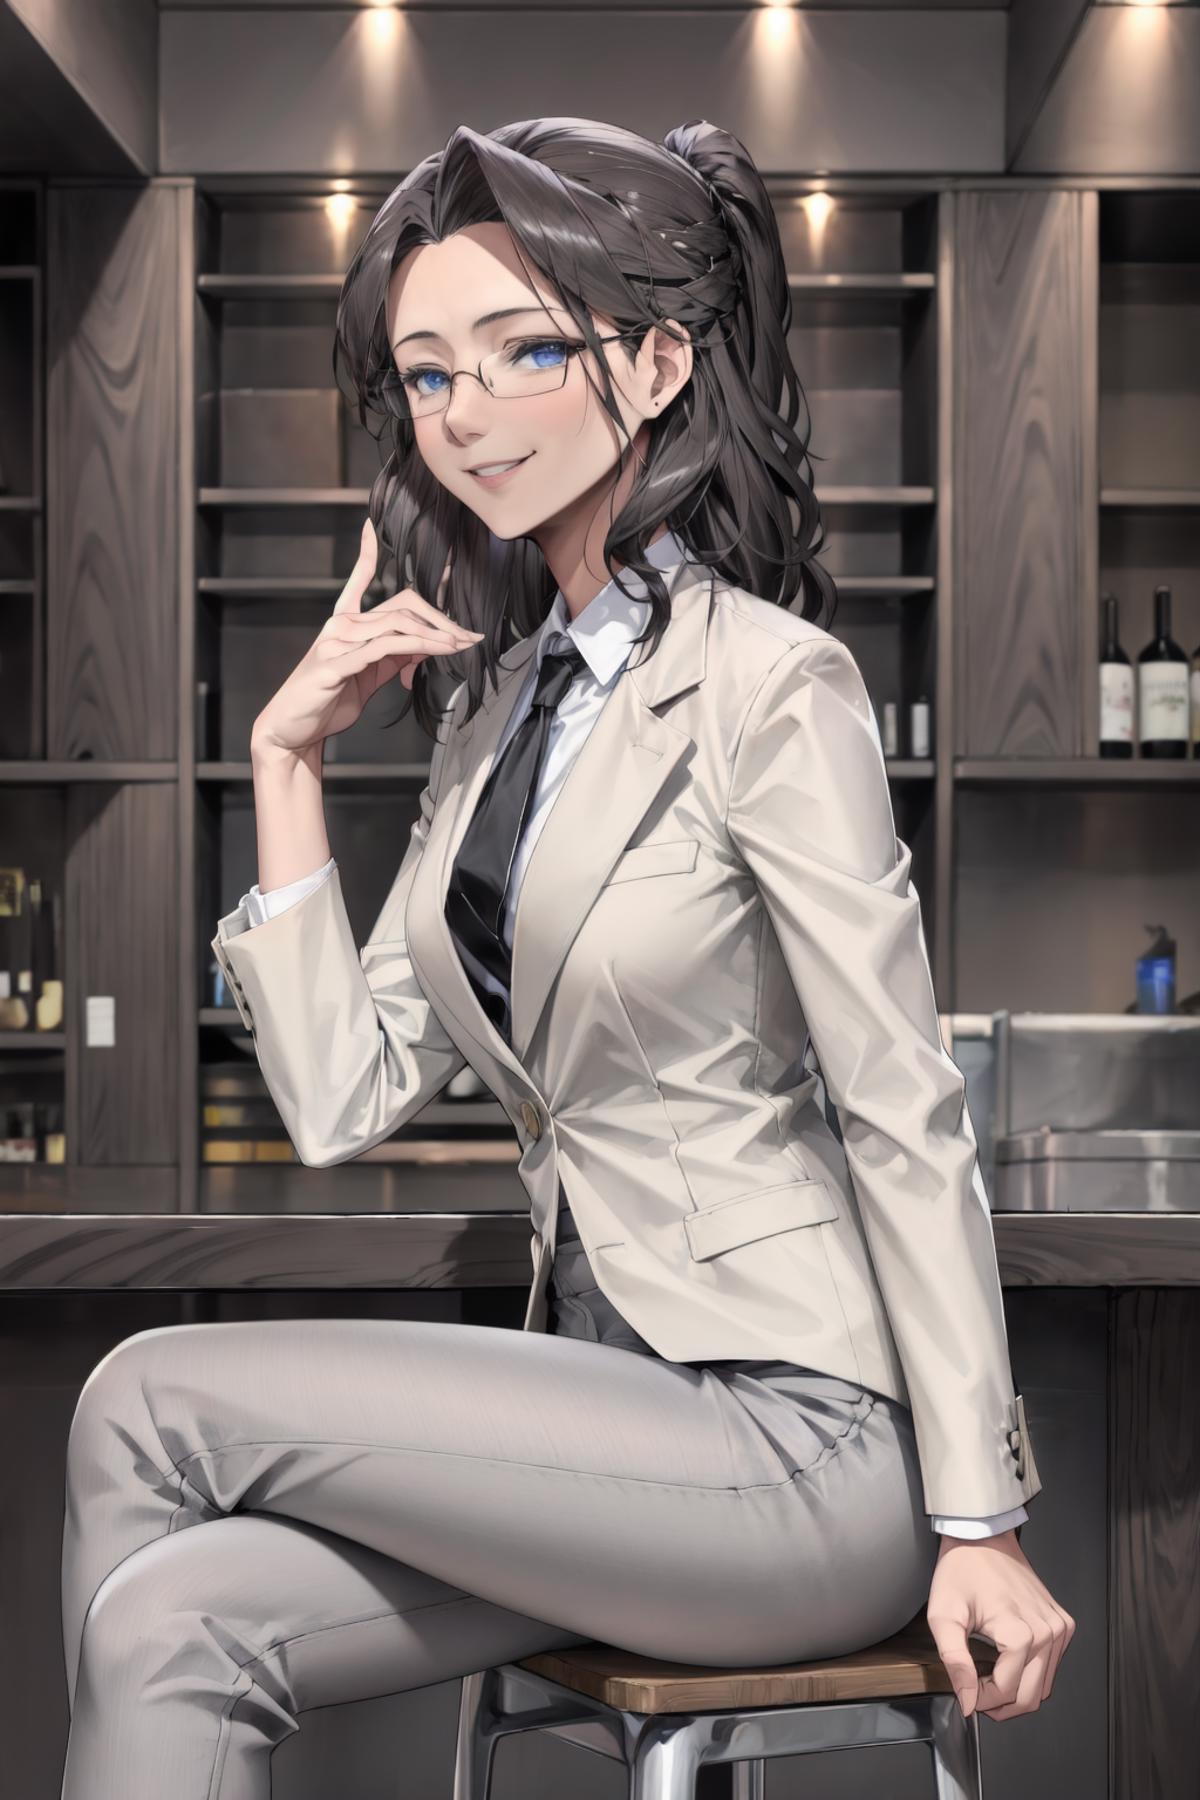 Inoue Iris - AliosArvin OC | Character image by IndolentCat